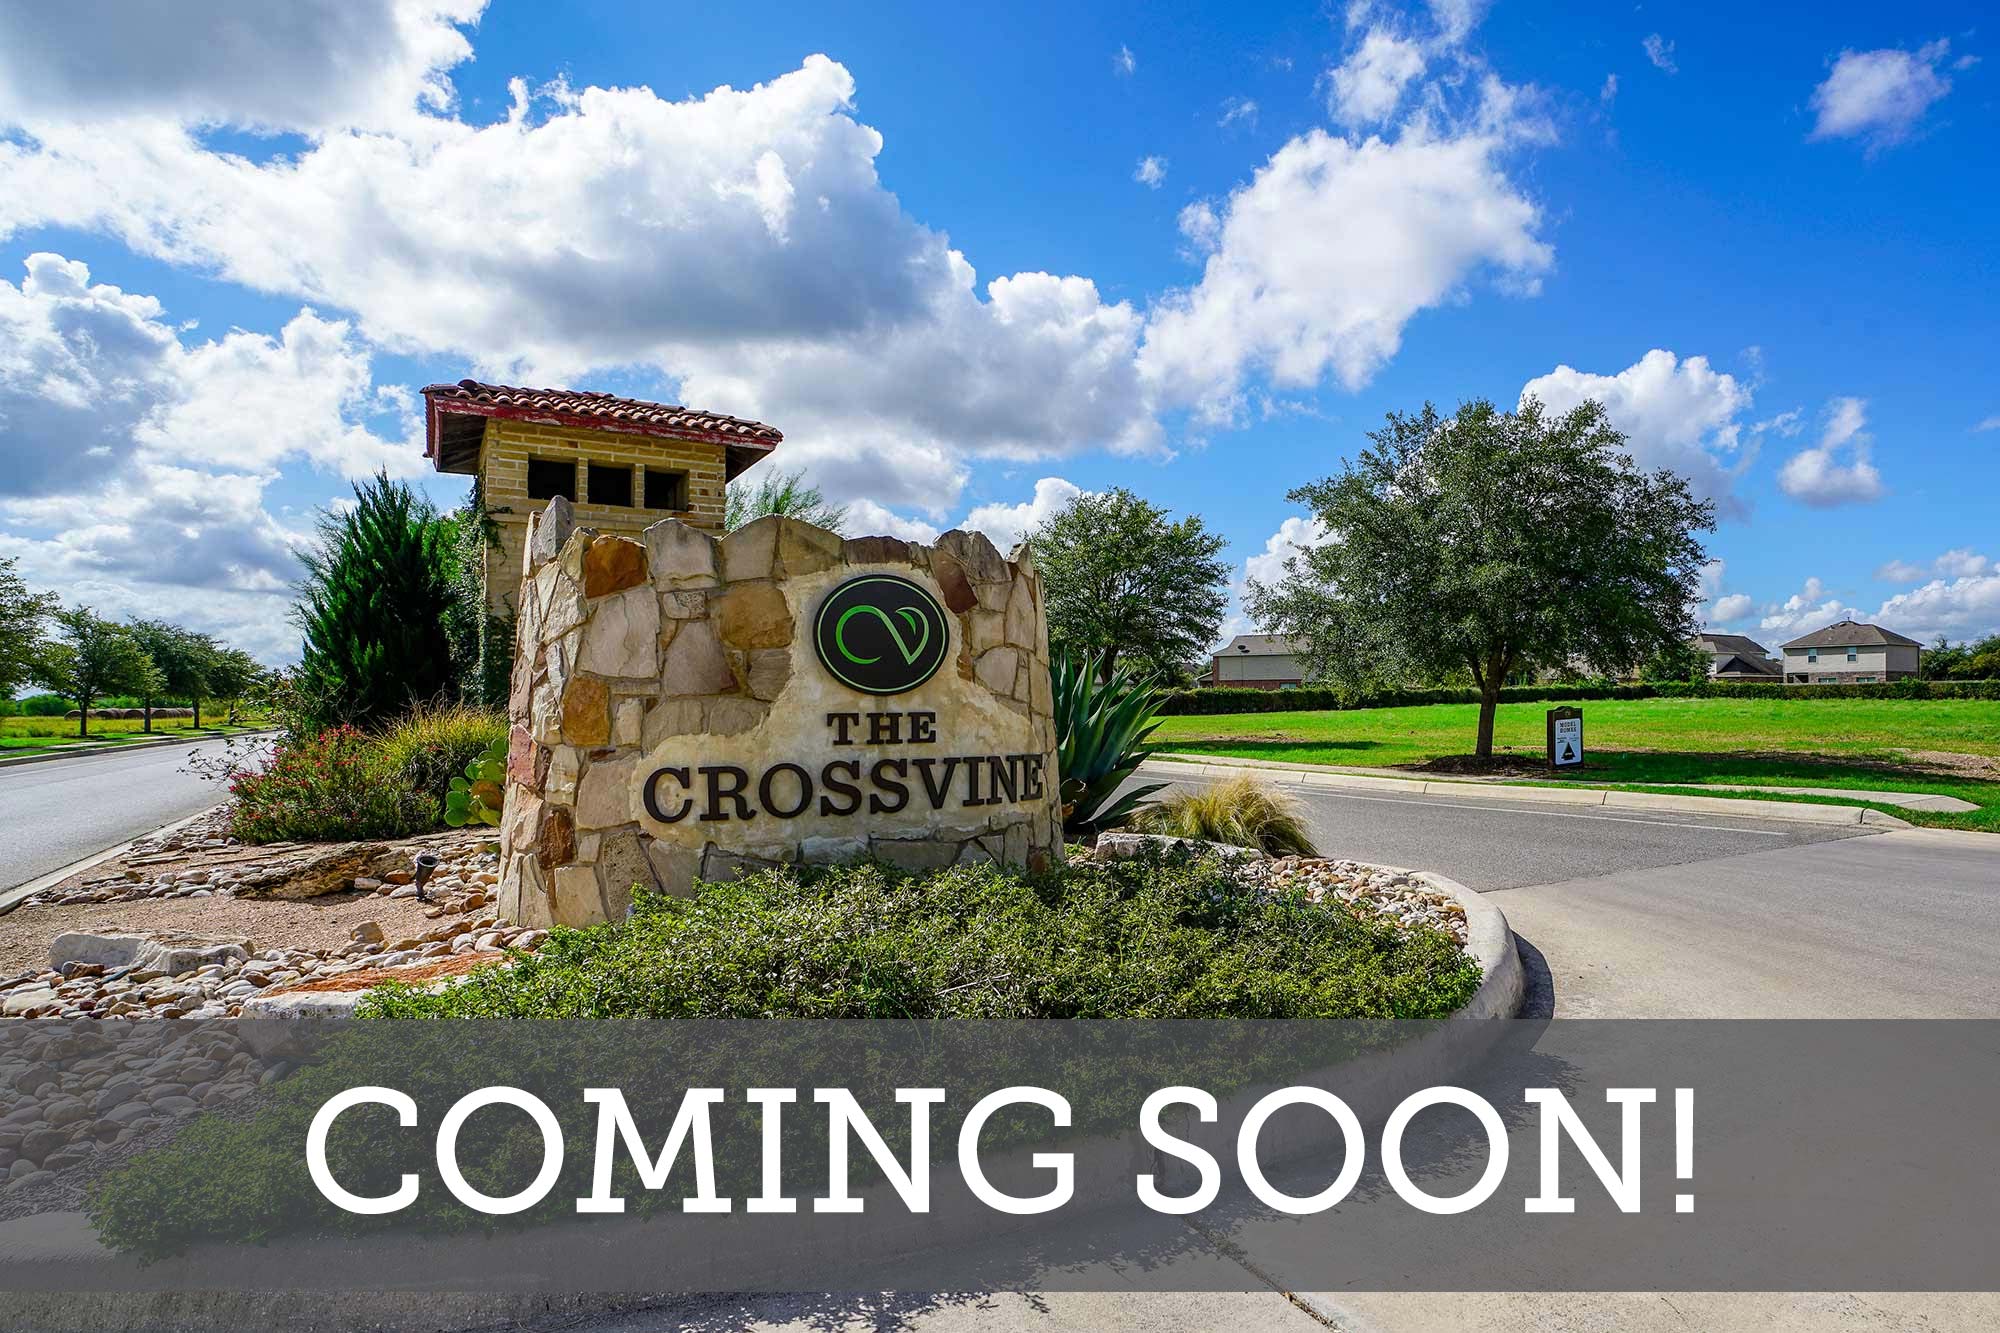 The Crossvine Gardens - Coming Soon